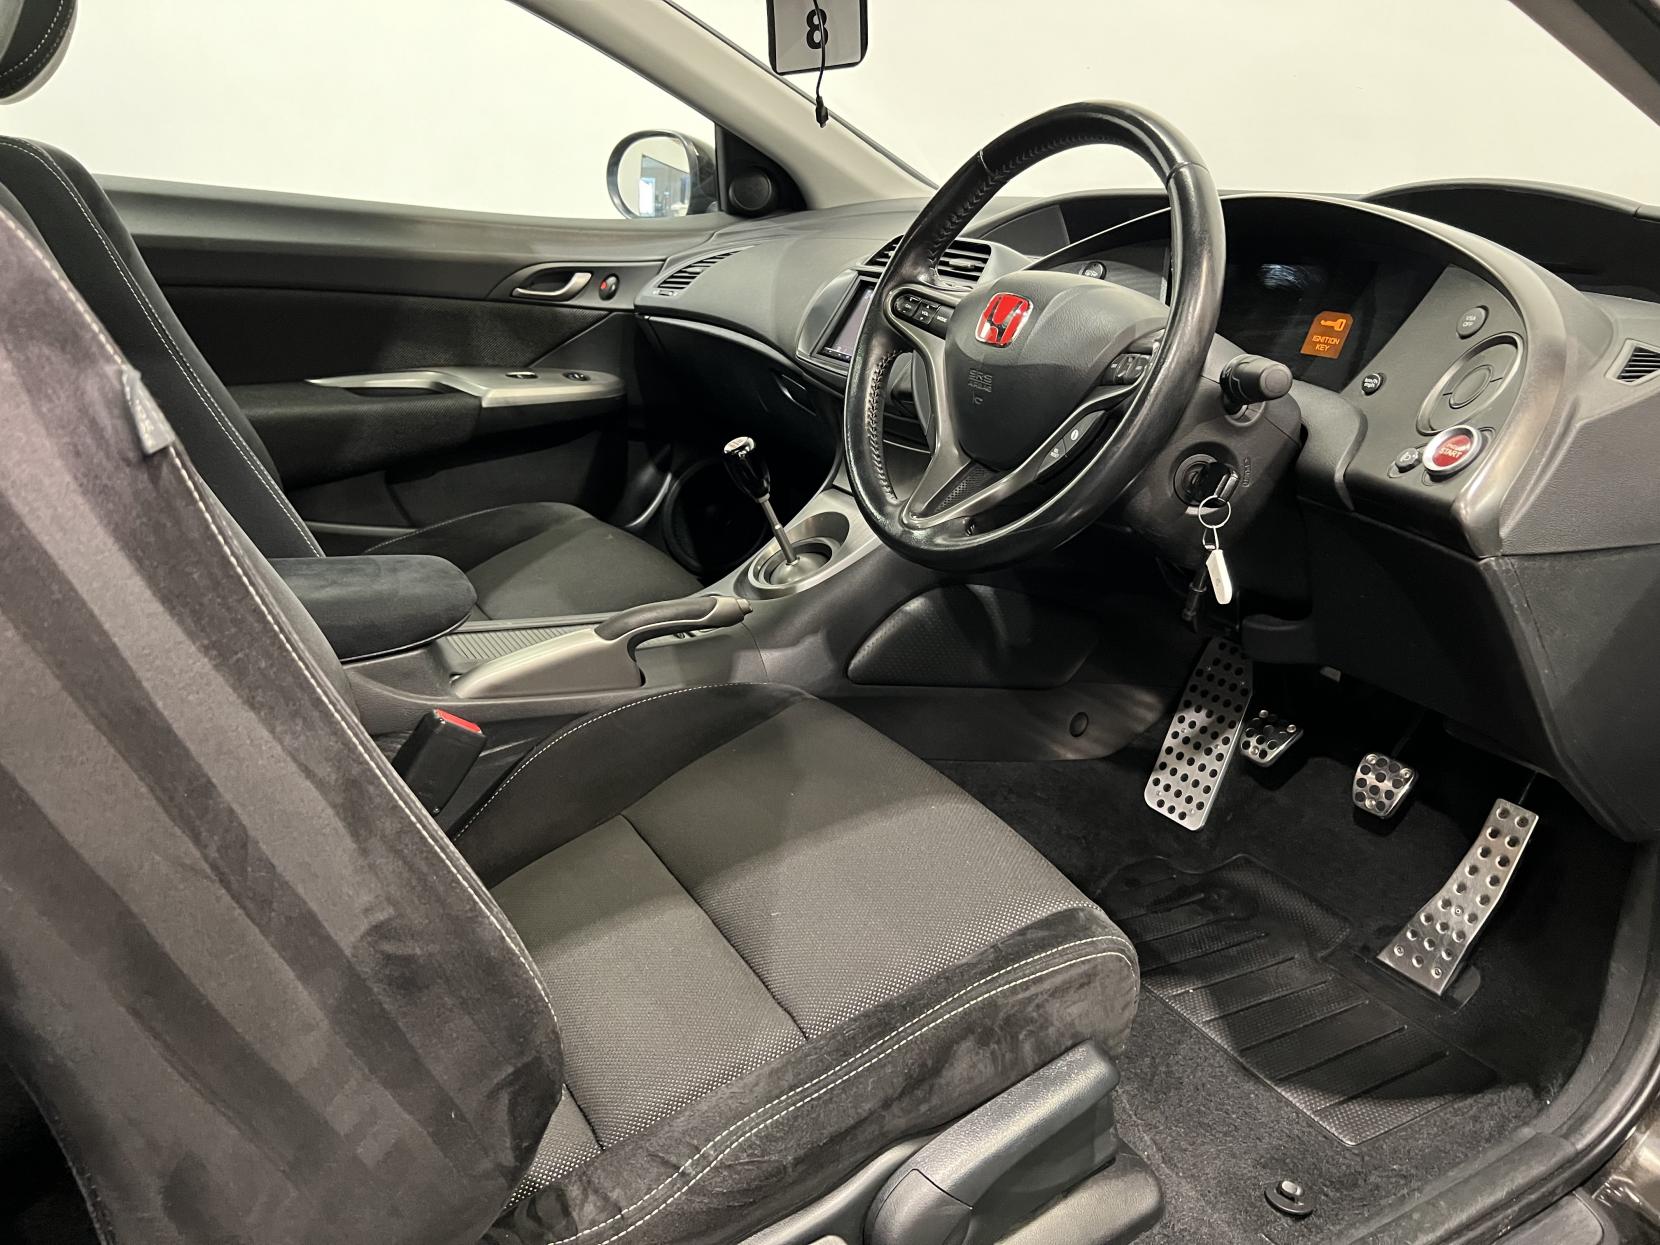 Honda Civic 2.2 i-CTDi Type S GT Hatchback 3dr Diesel Manual (136 g/km, 138 bhp)